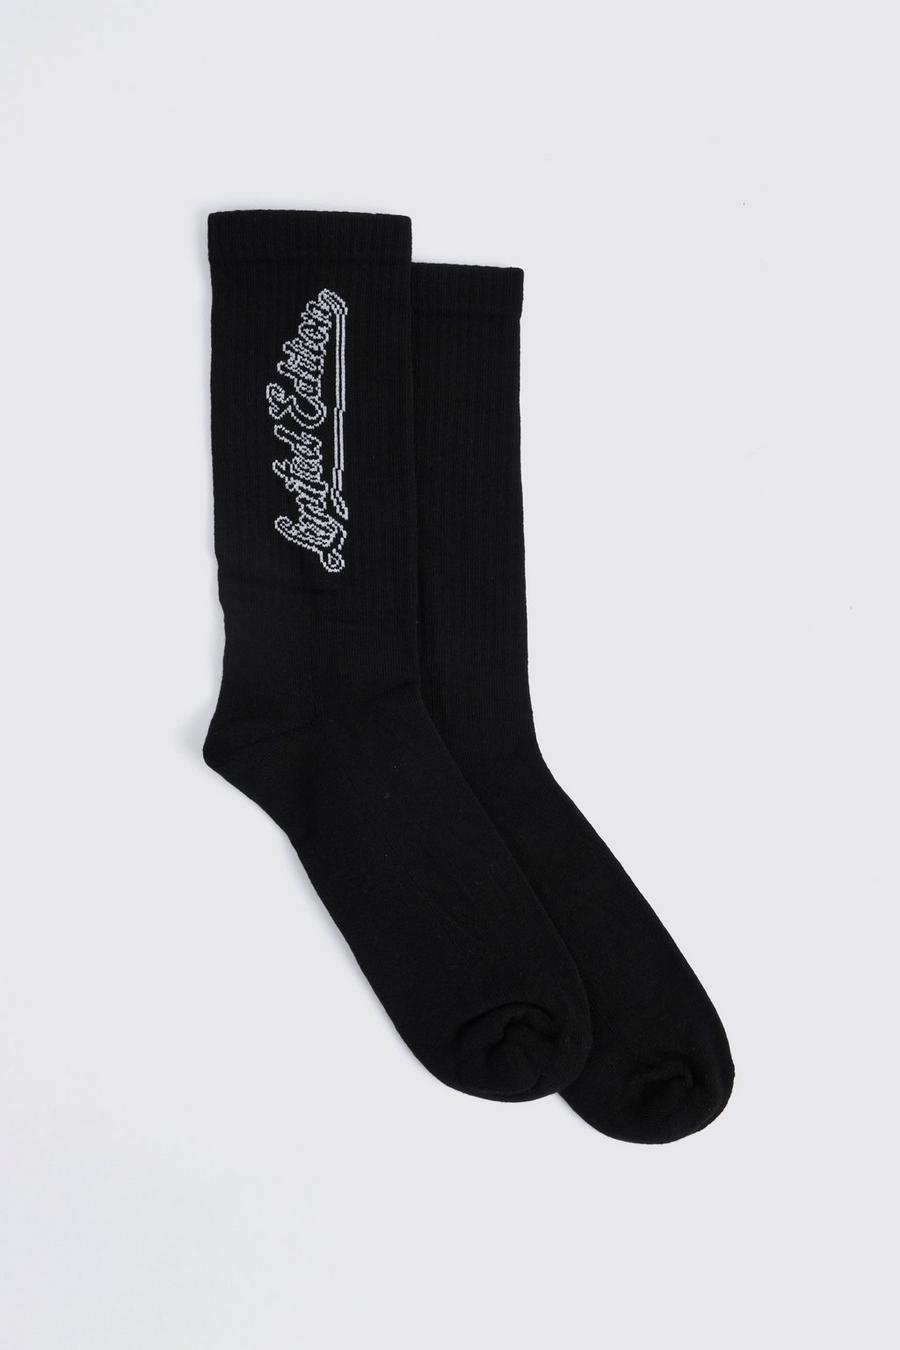 Black Jacquard Limited Edition Sock